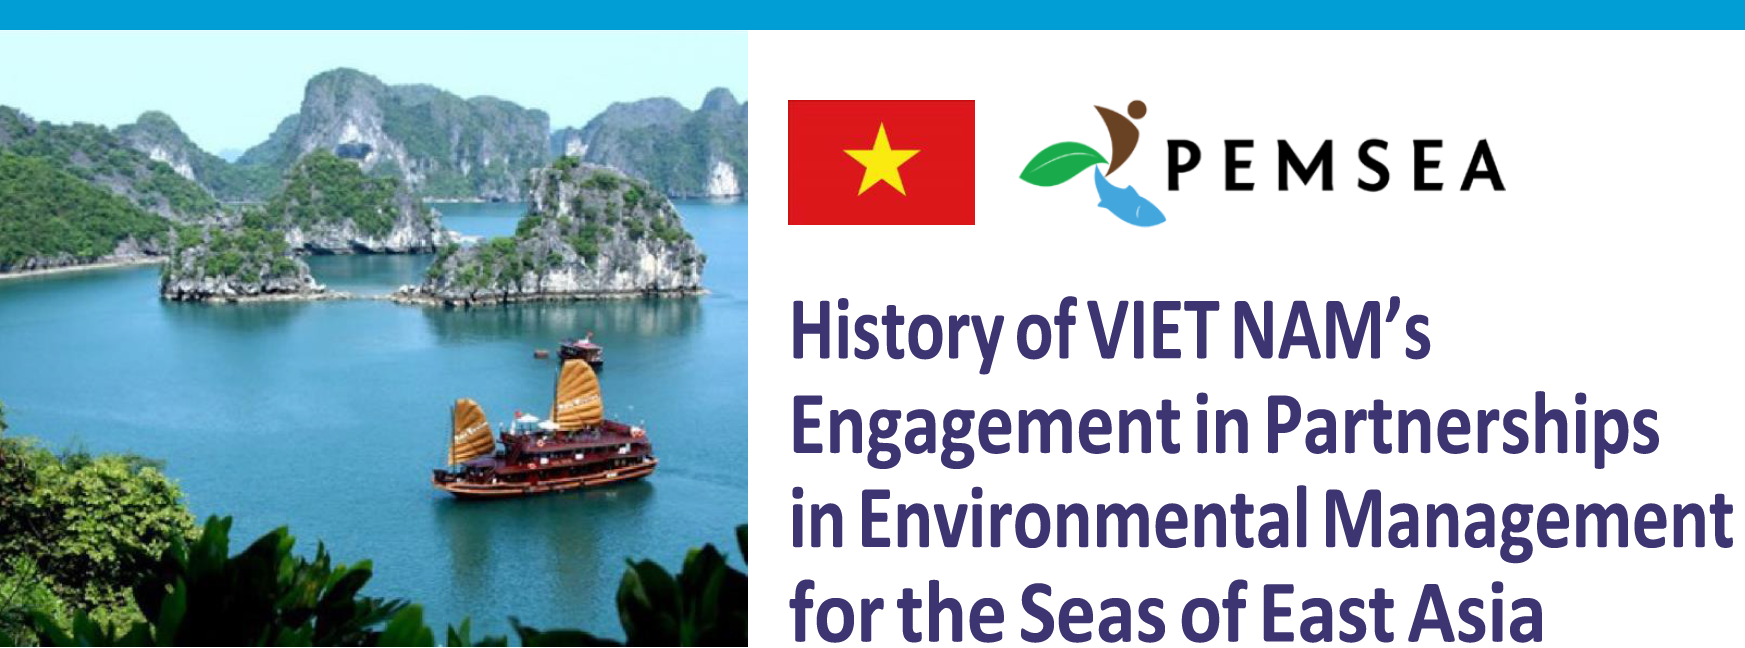 History of Viet Nam's engagement in PEMSEA